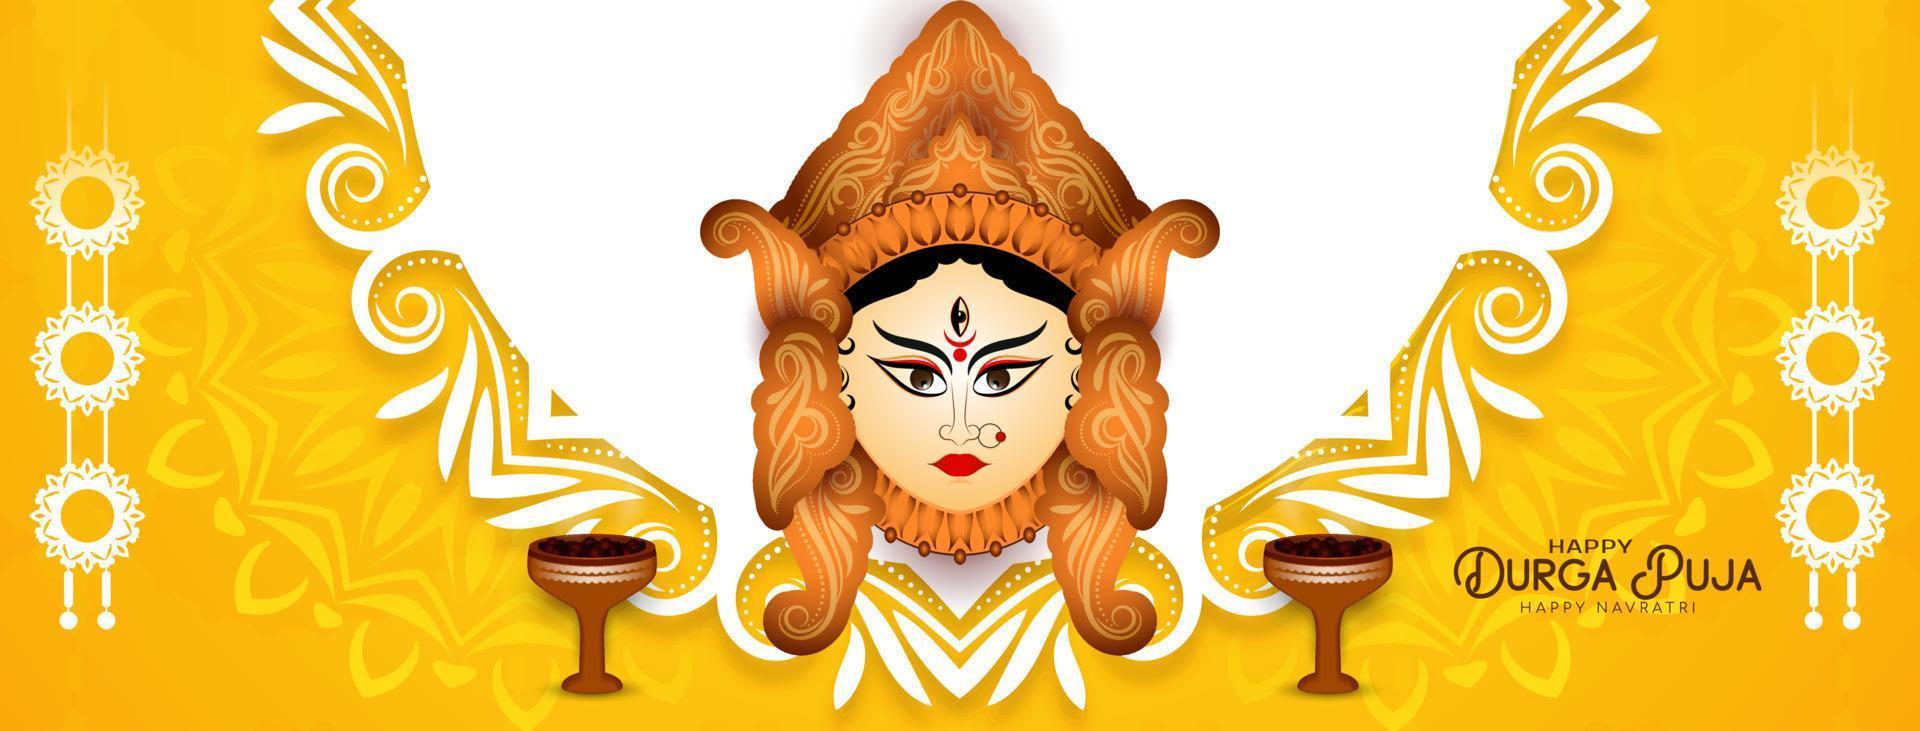 Durga Puja and Happy navratri festival banner with goddess Durga face vector